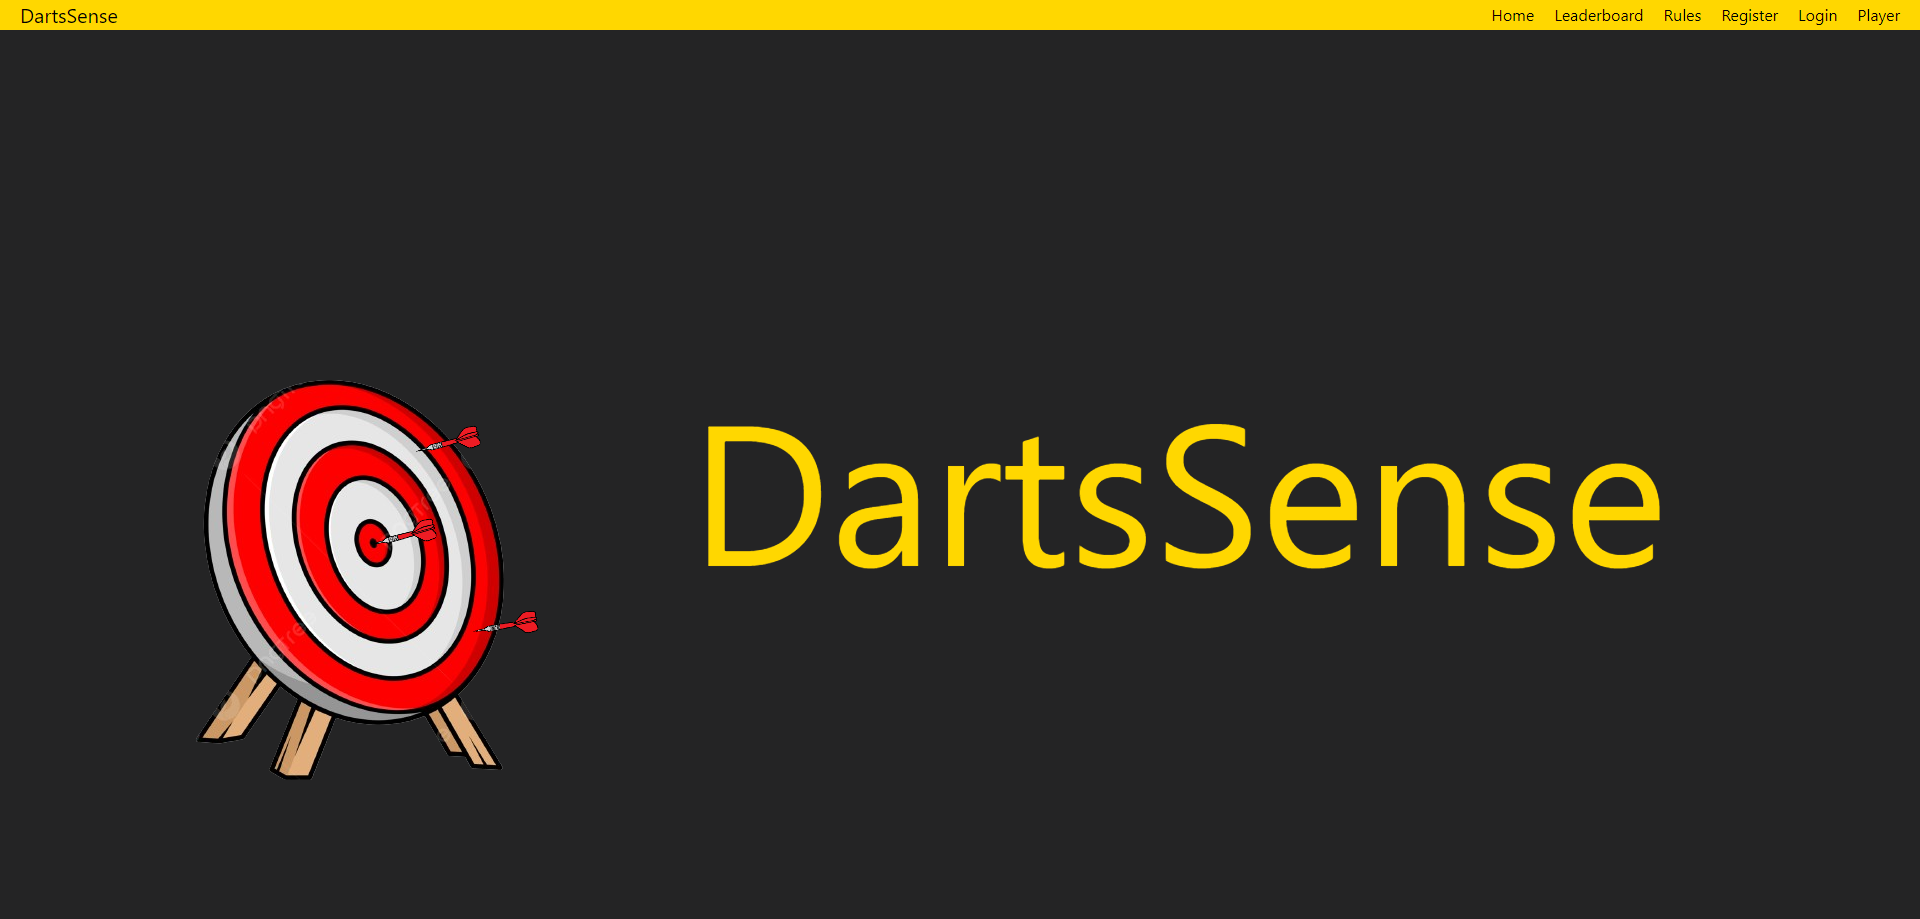 снимка 1 от проект DartsSense